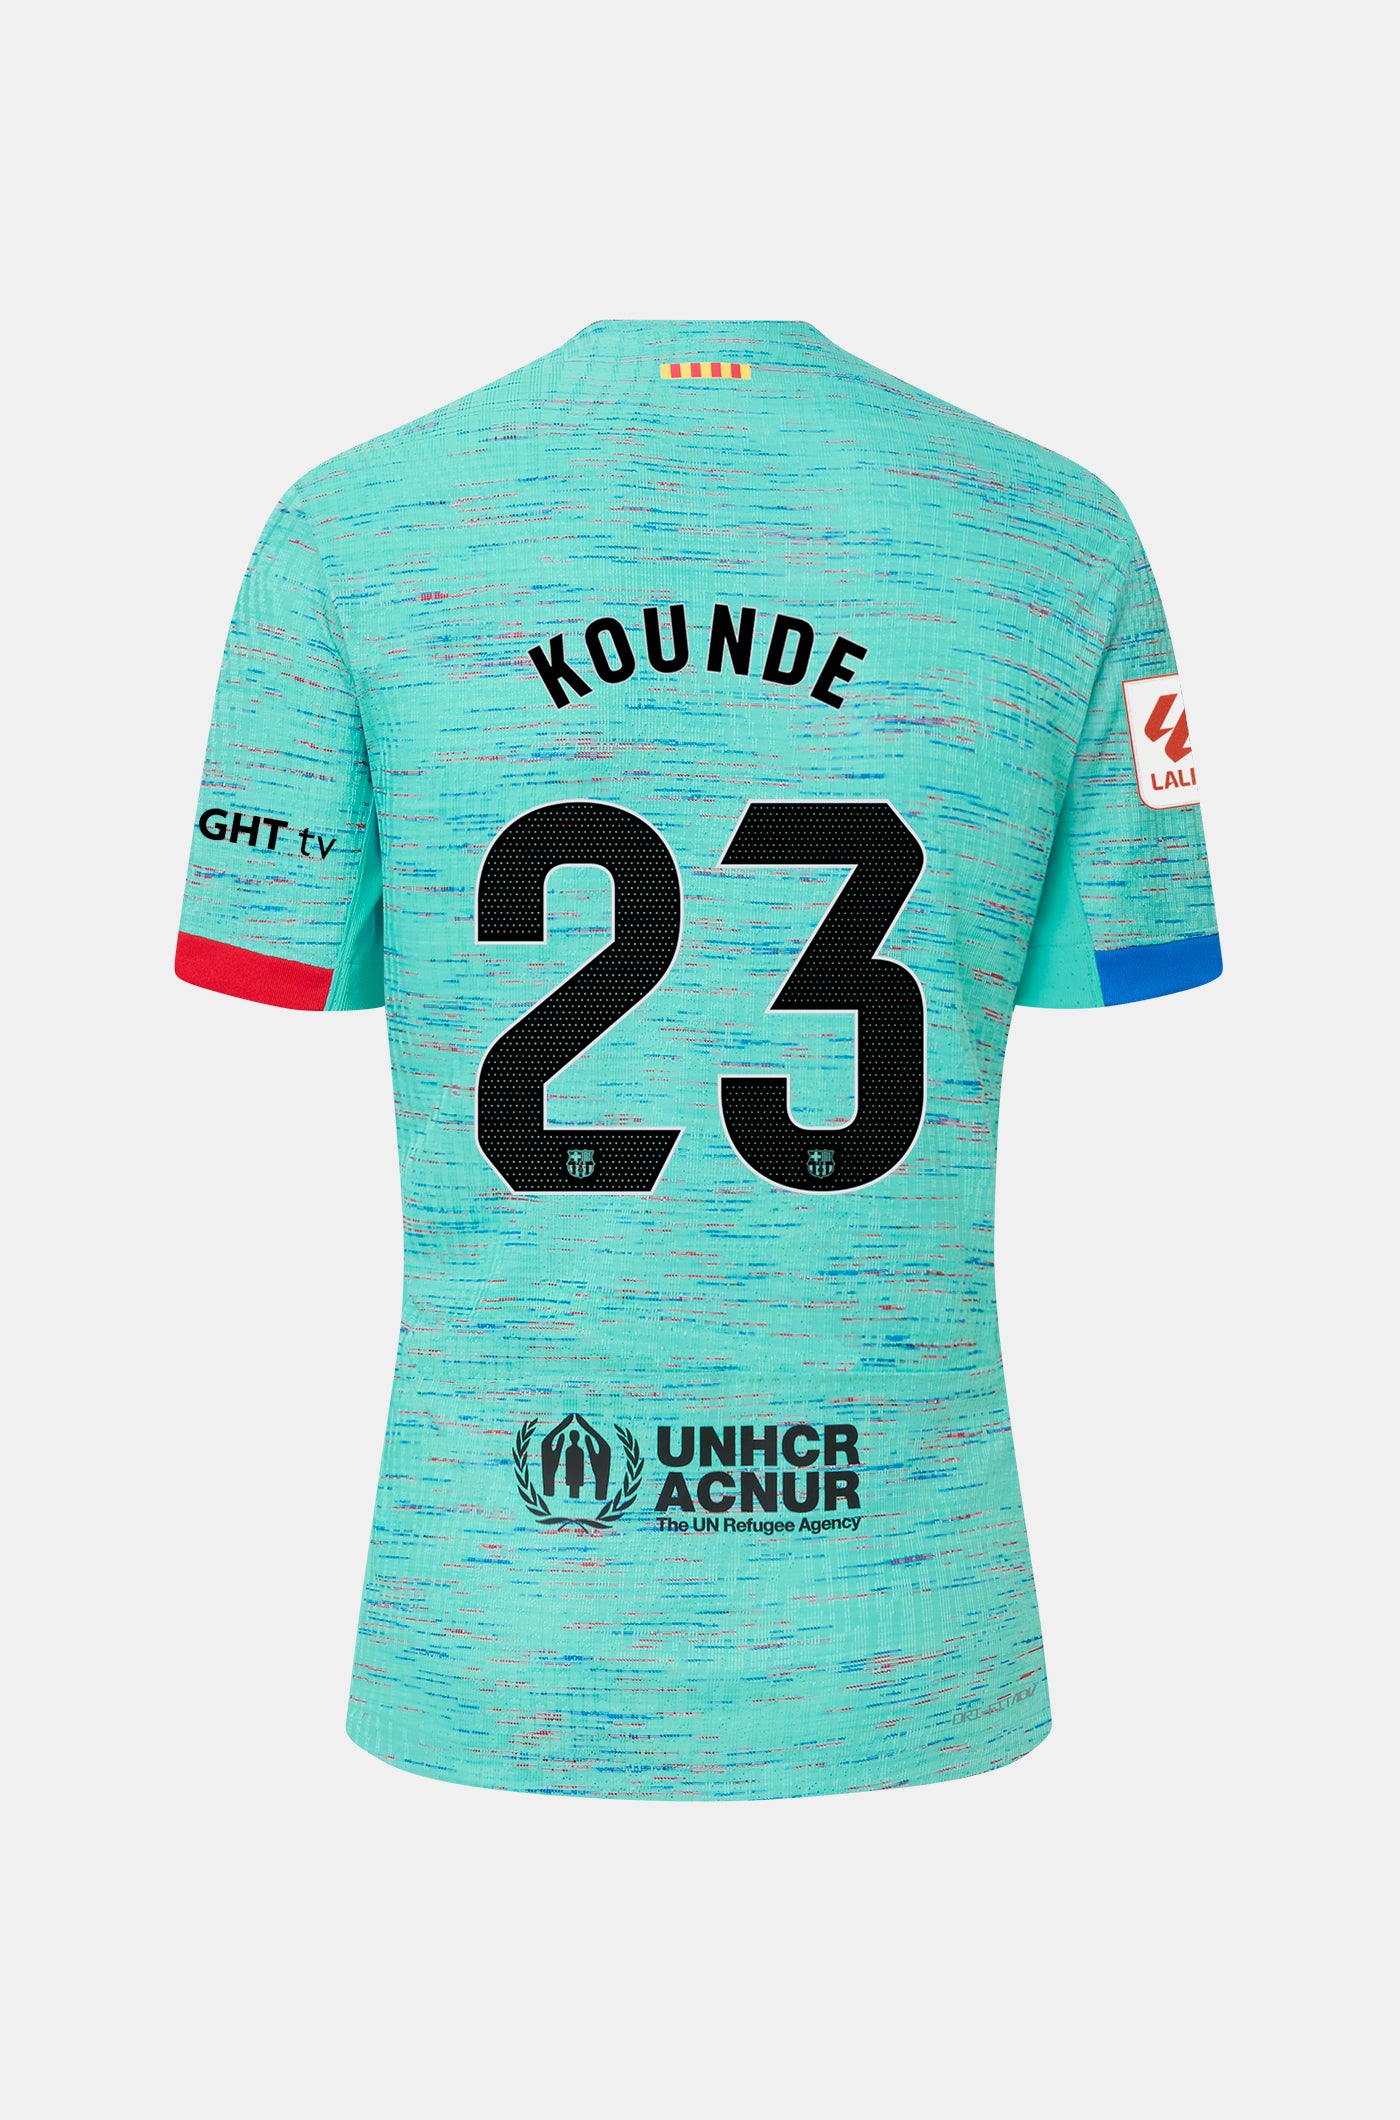 LFP FC Barcelona third shirt 23/24 Player’s Edition  - KOUNDE